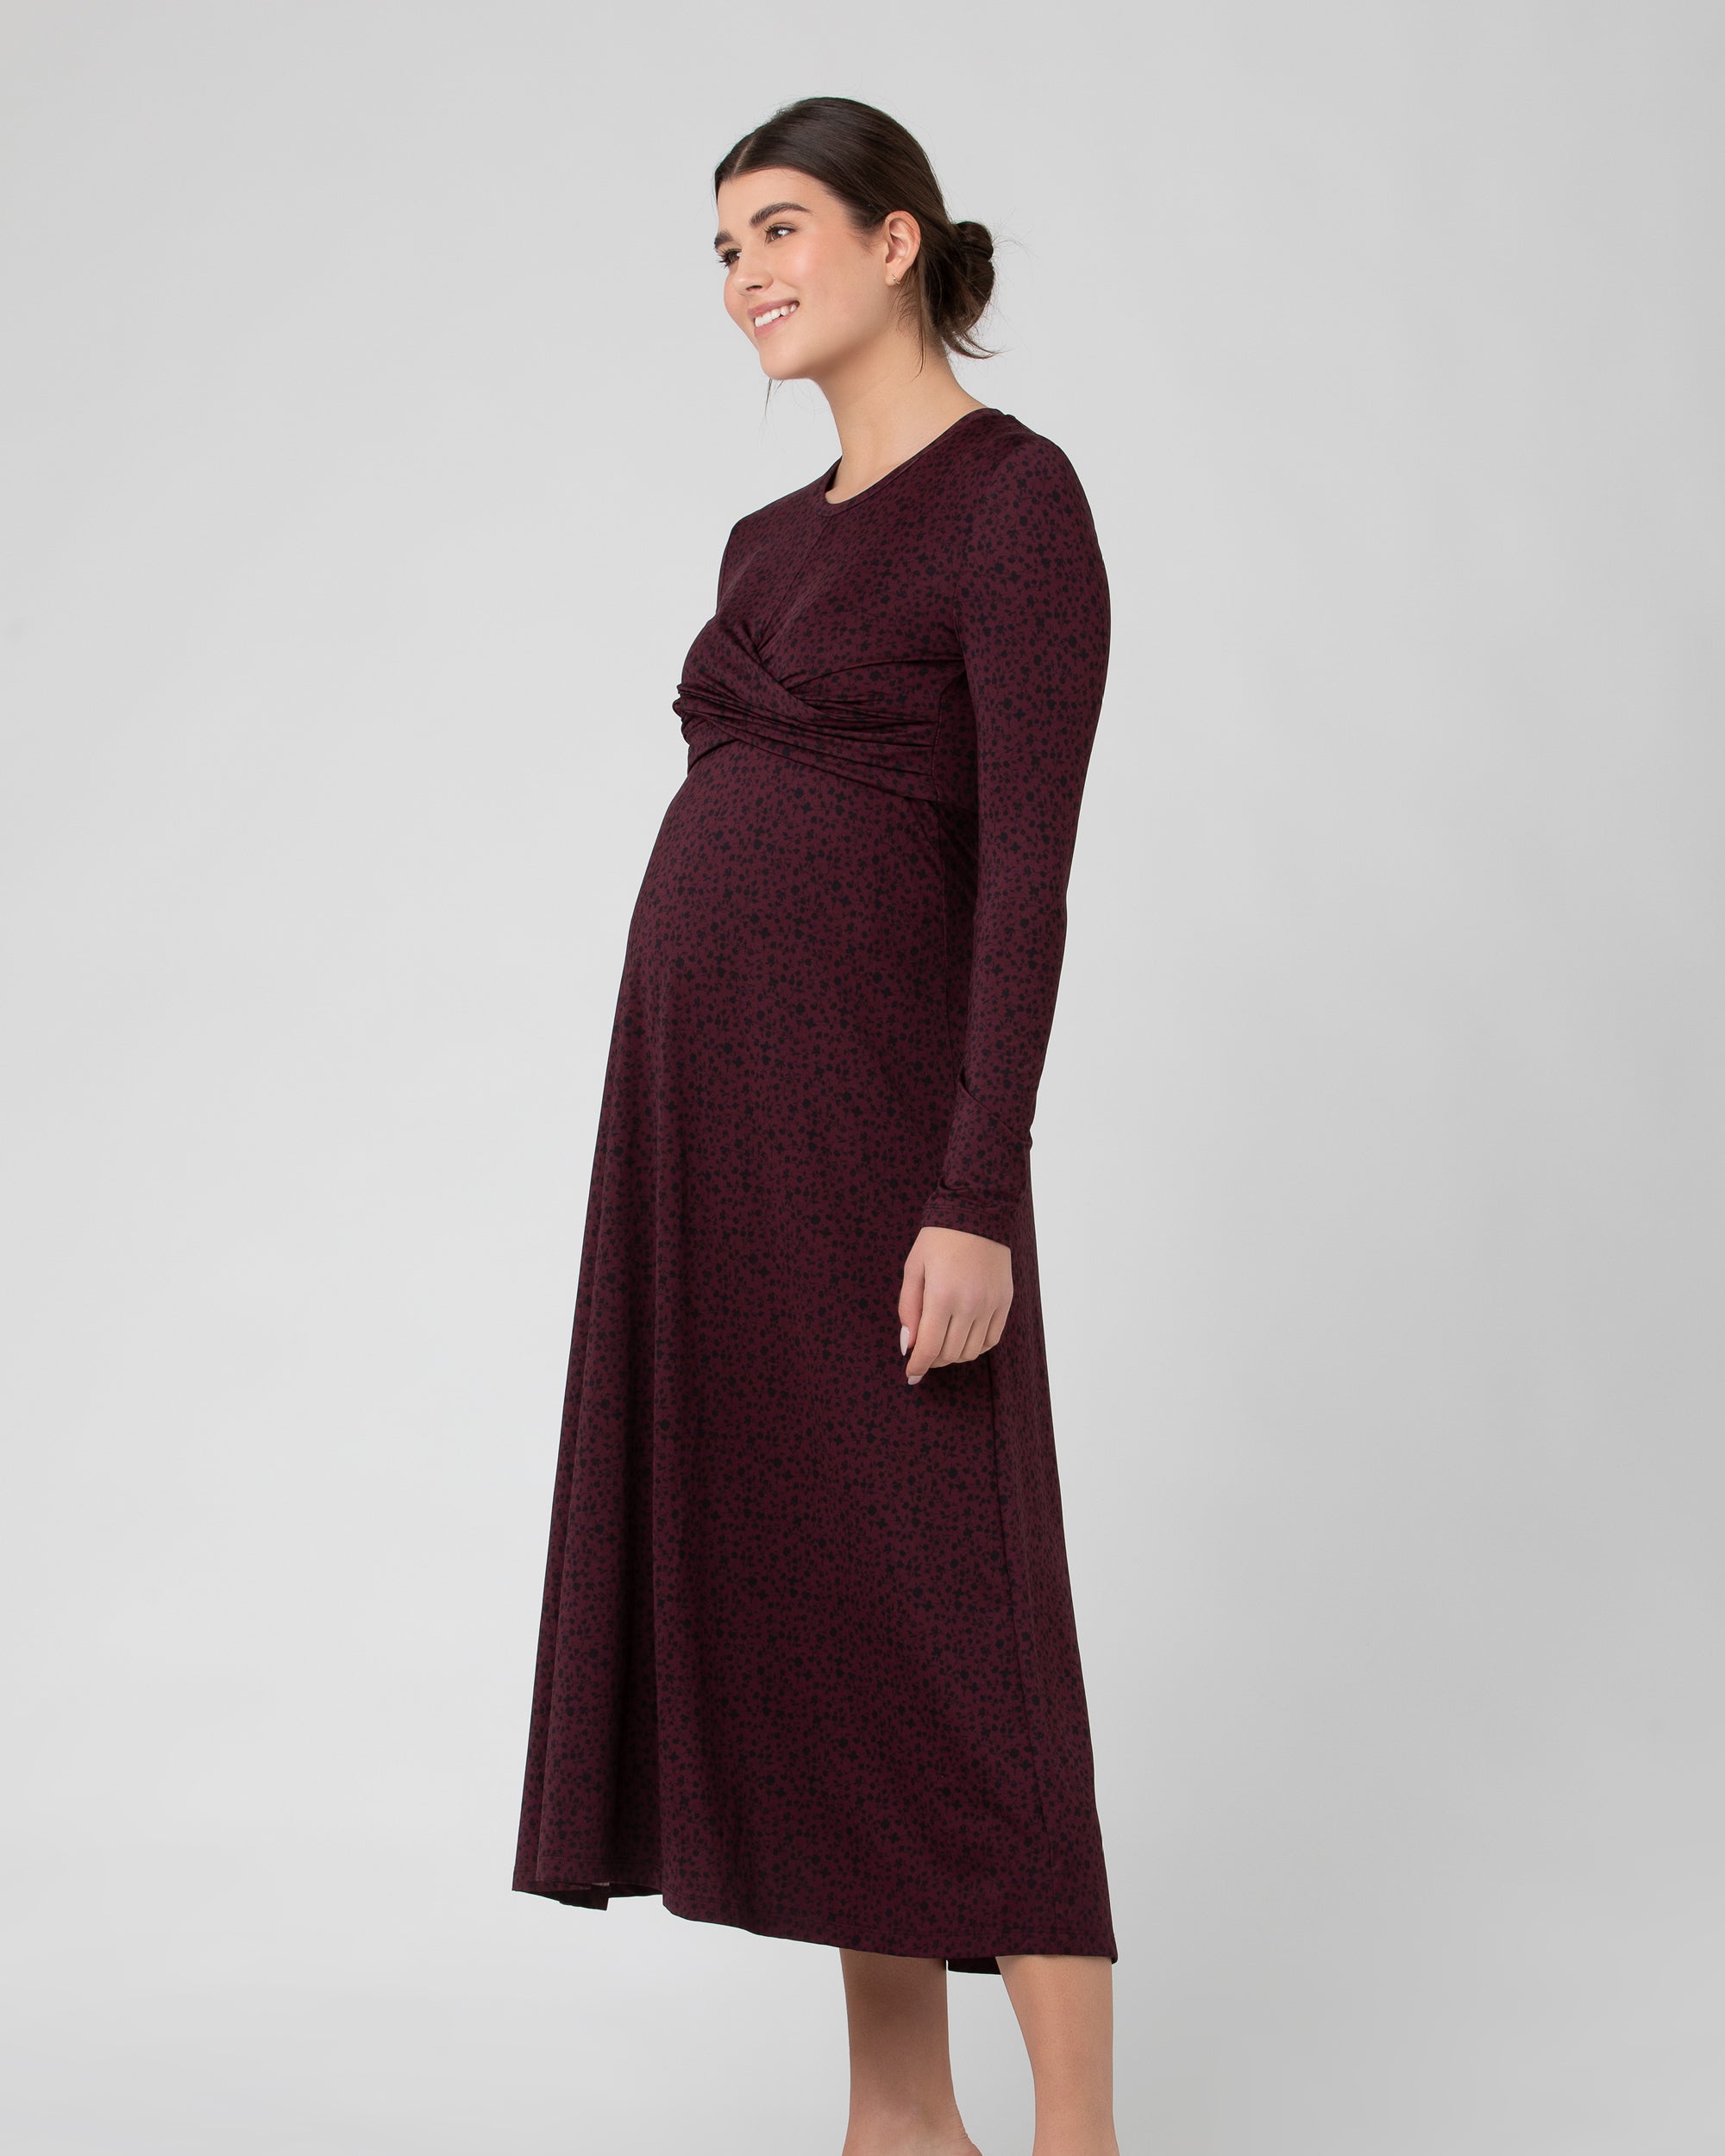 Maternity Dresses Sale